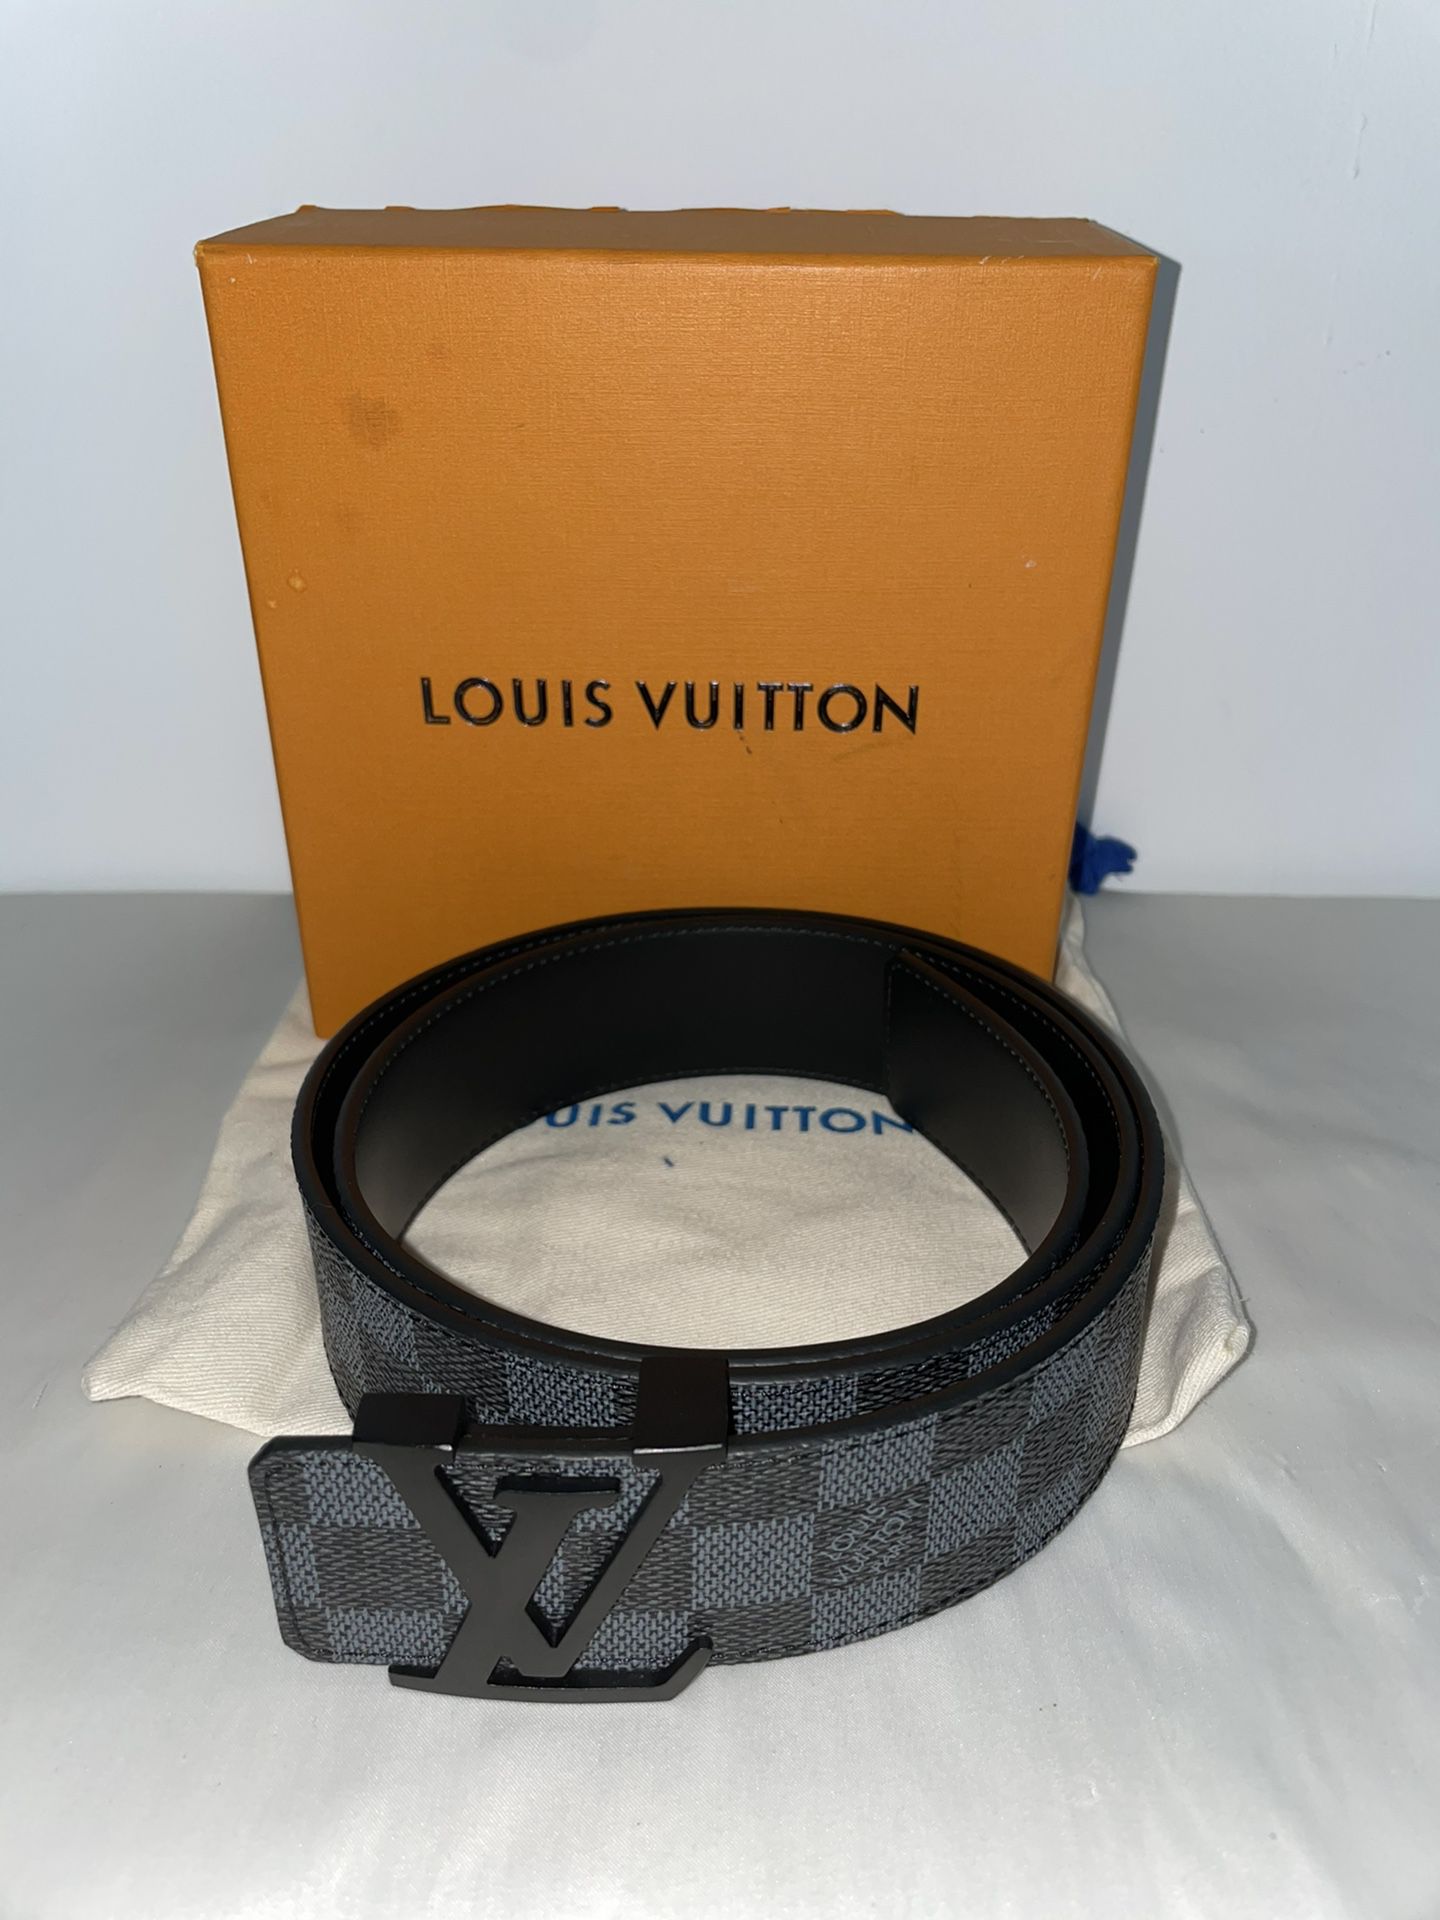 Sold at Auction: 3 Louis Vuitton Items, incl. Metropolis Flat Ranger Boots,  Packing Cube PM, Logo Belt